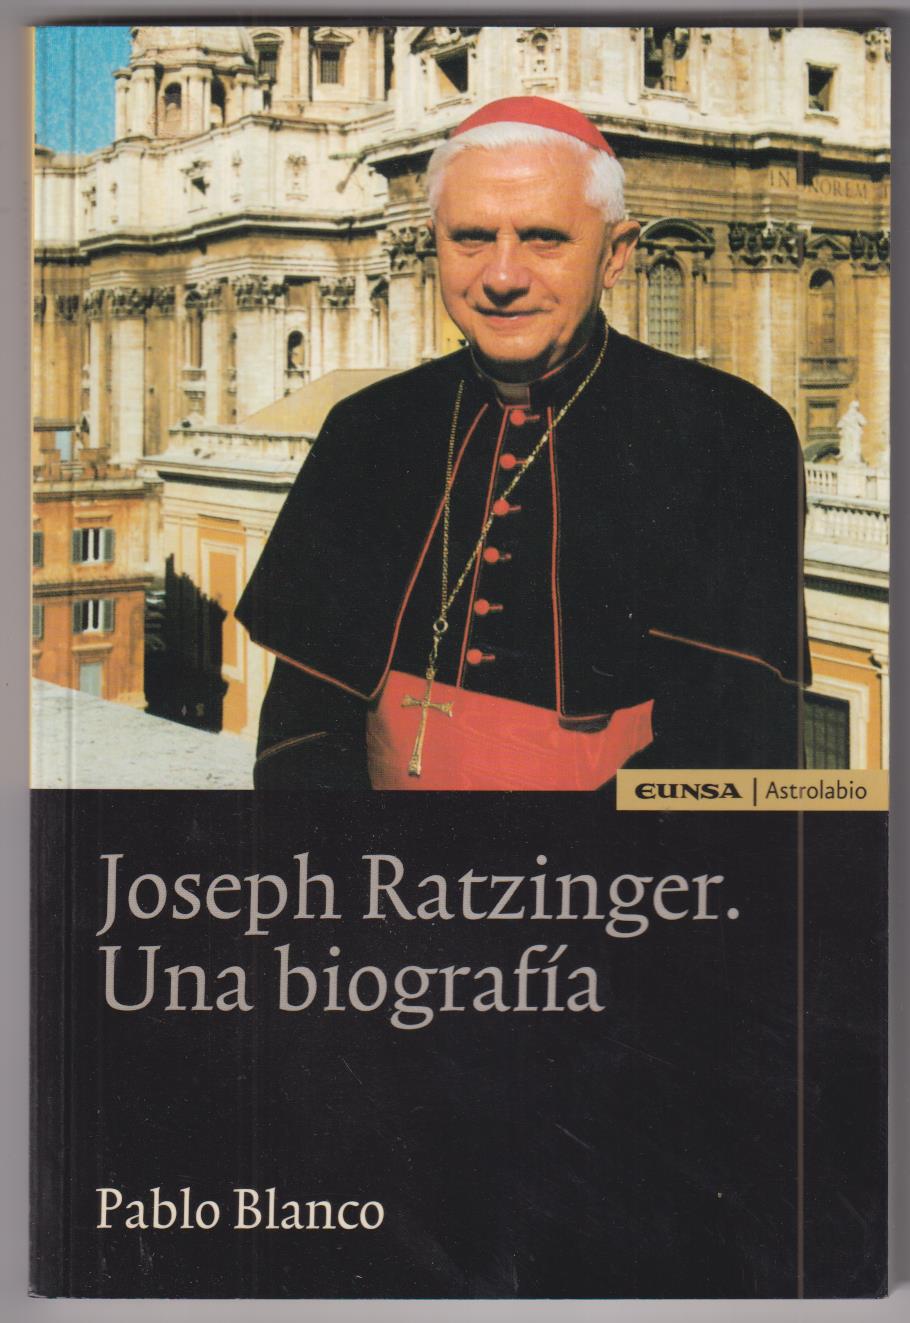 Pablo Blanco. Joseph Ratzinger. Una biografía. Eunsa, 2004. SIN USAR